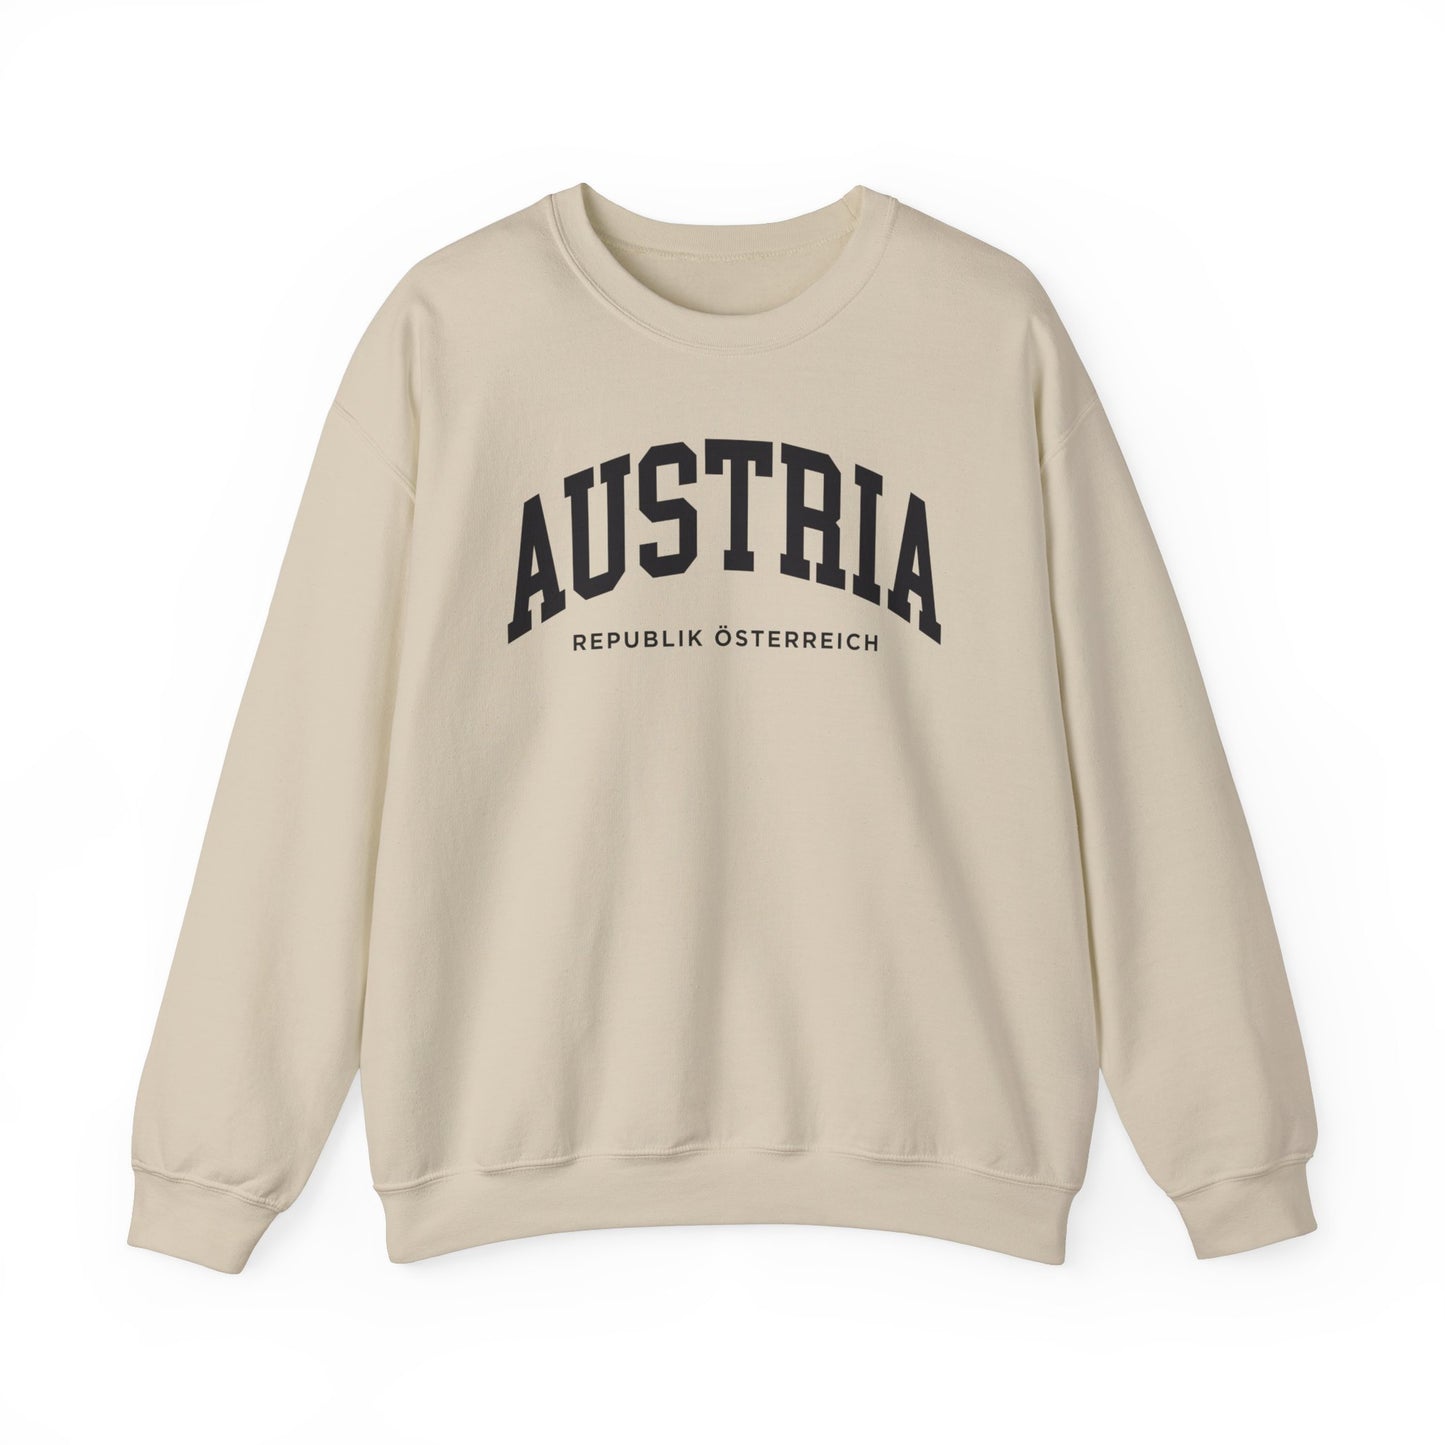 Austria Sweatshirt